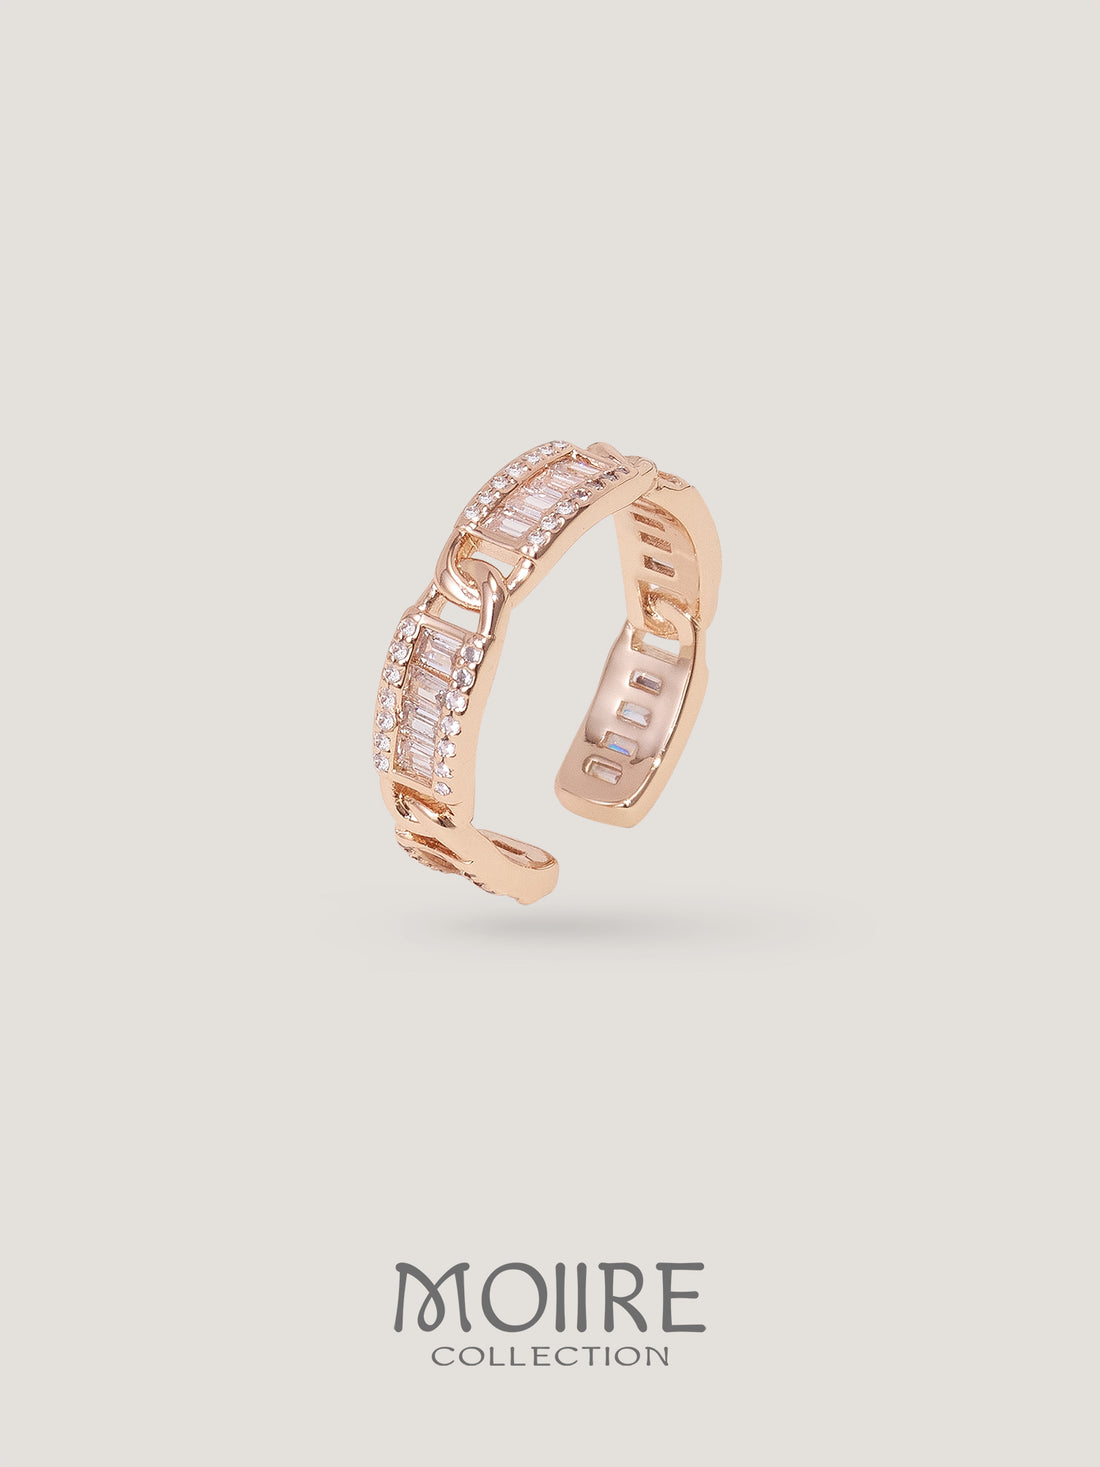 Moiire Jewelry | 高光時刻